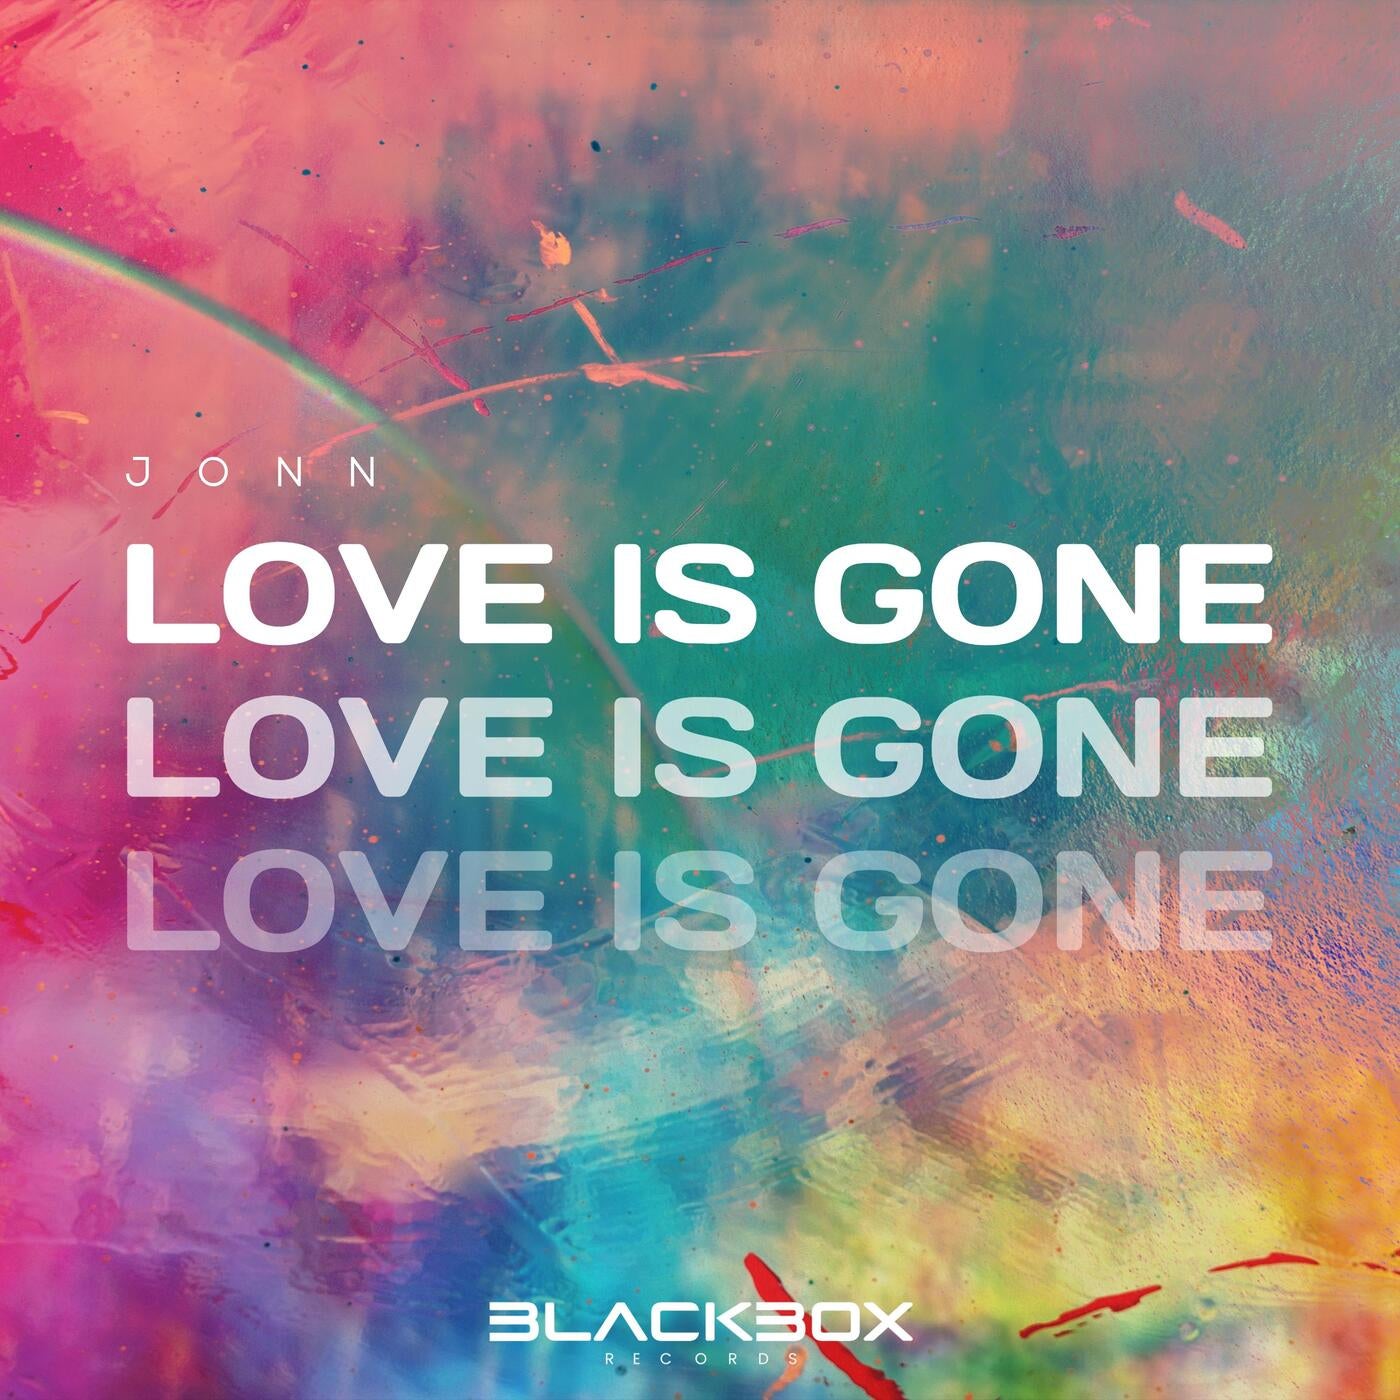 Love is gone